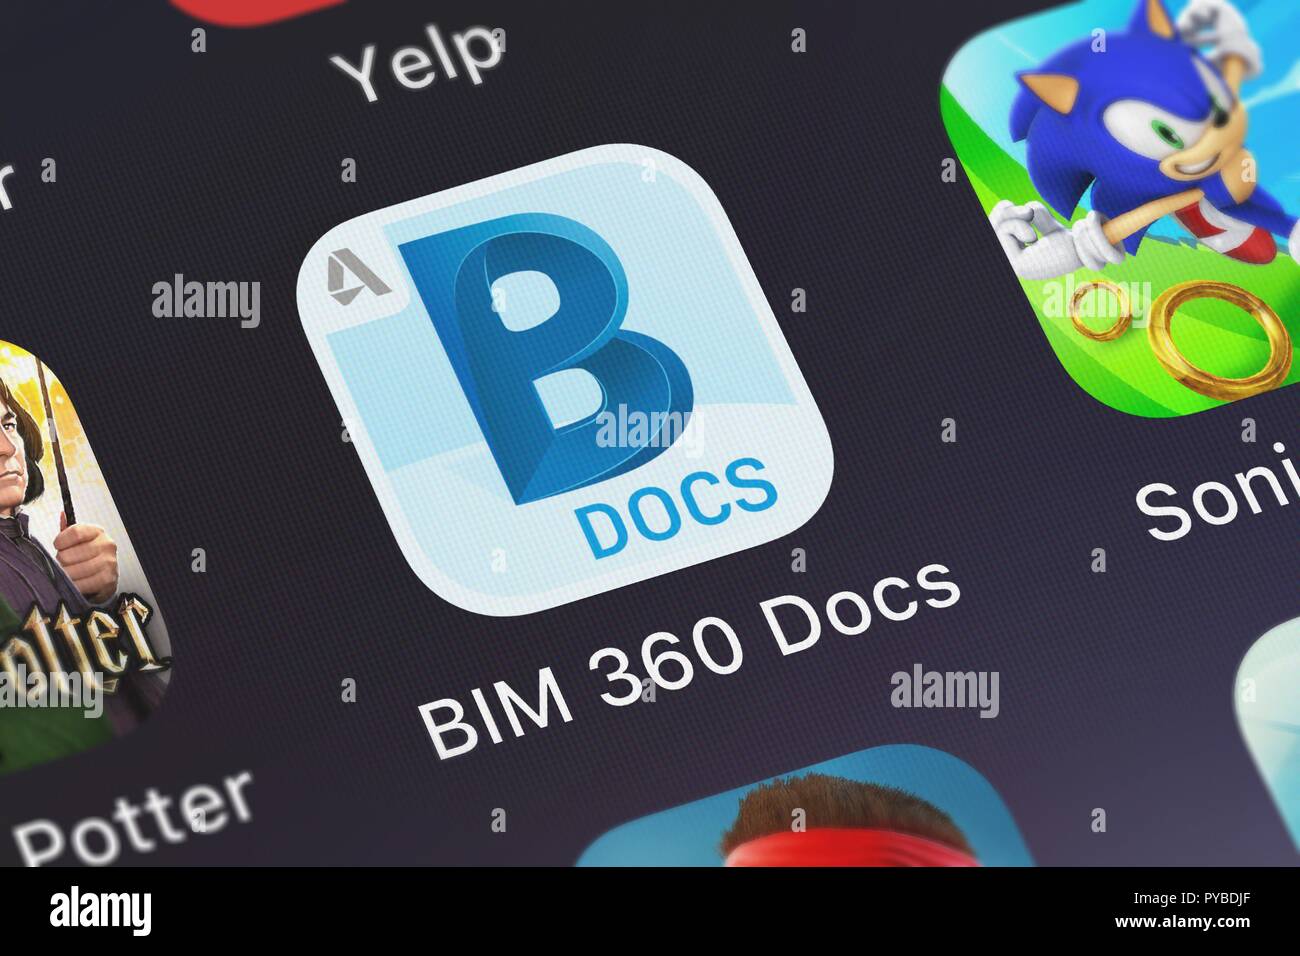 London, United Kingdom - October 26, 2018: Close-up shot of Autodesk Inc.'s popular app BIM 360 Docs. Stock Photo